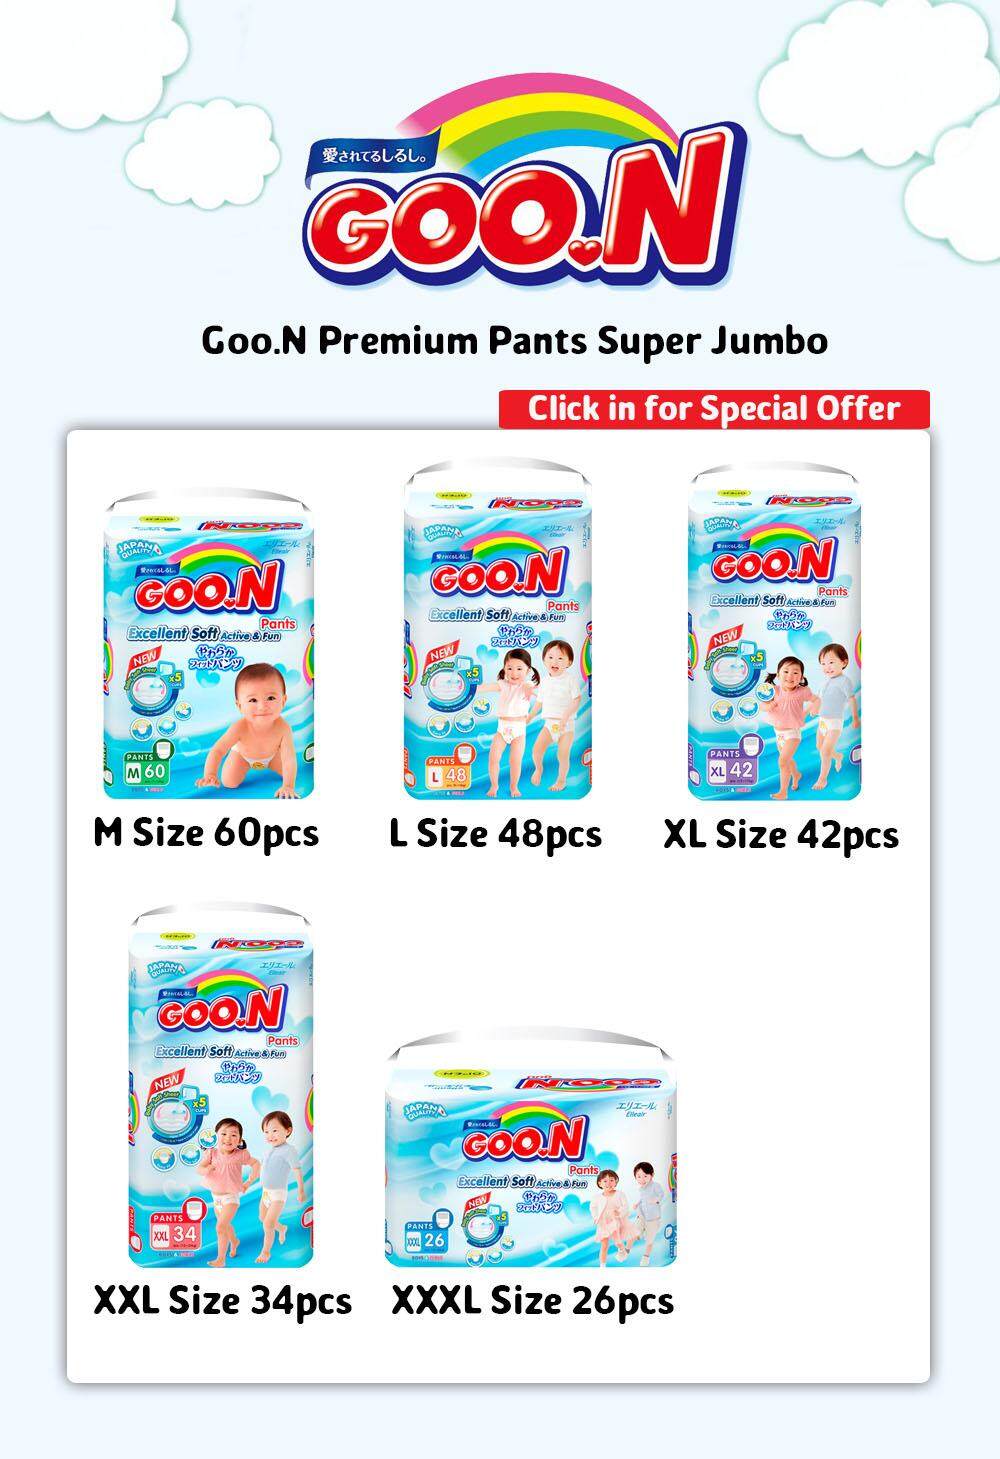 GooN Premium Pants Super Jumbo Product Description 1.jpg